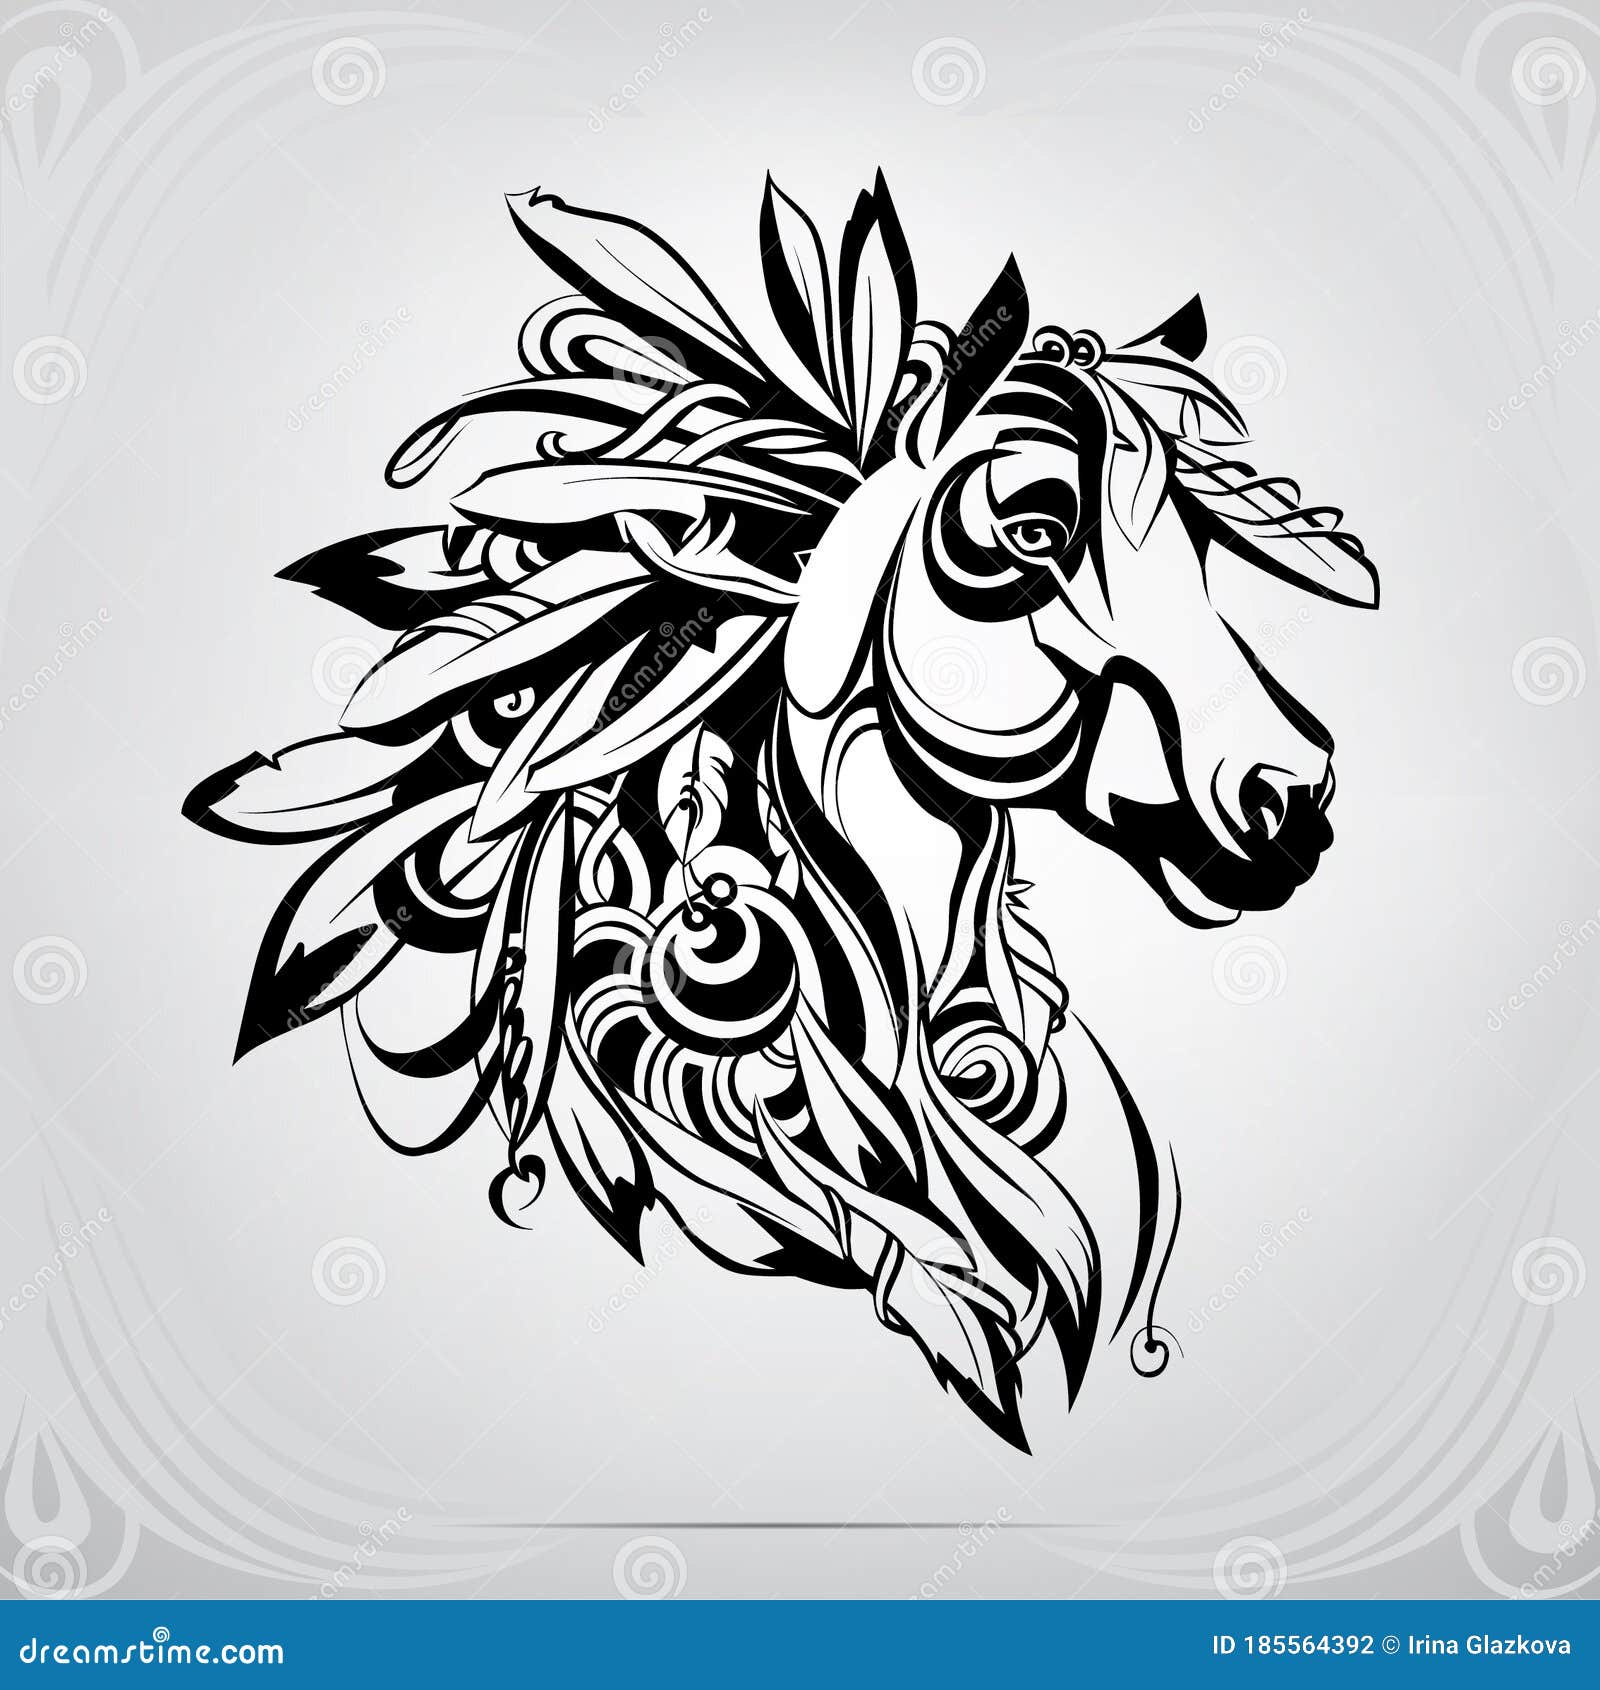 native american horse clip art